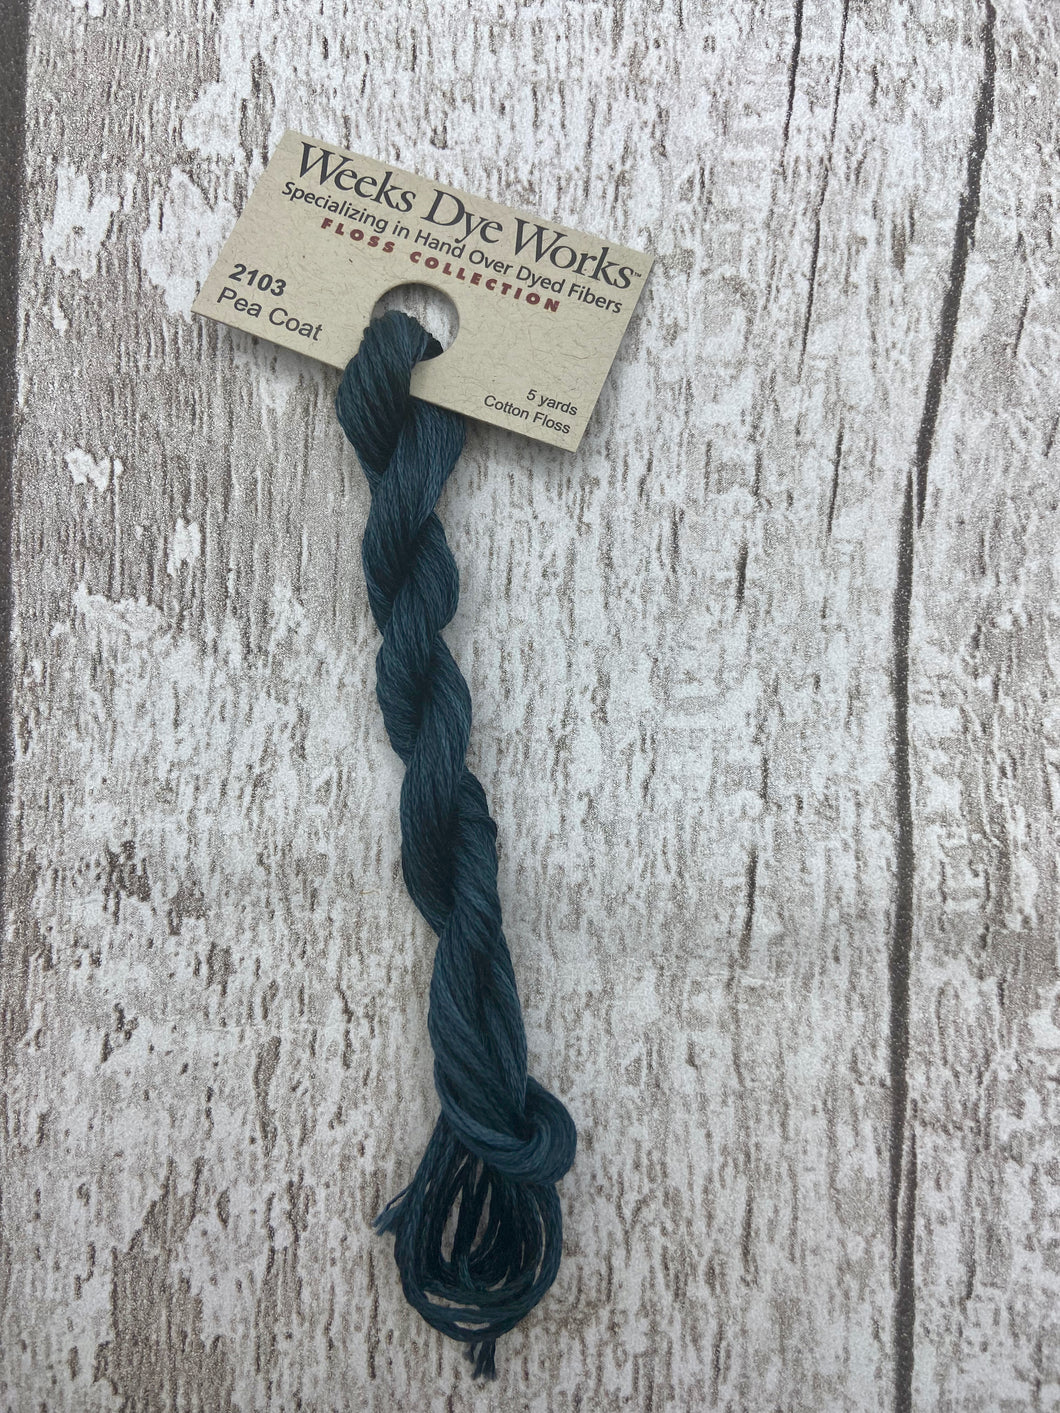 Pea Coat (#2103) Weeks Dye Works 6-strand cotton floss